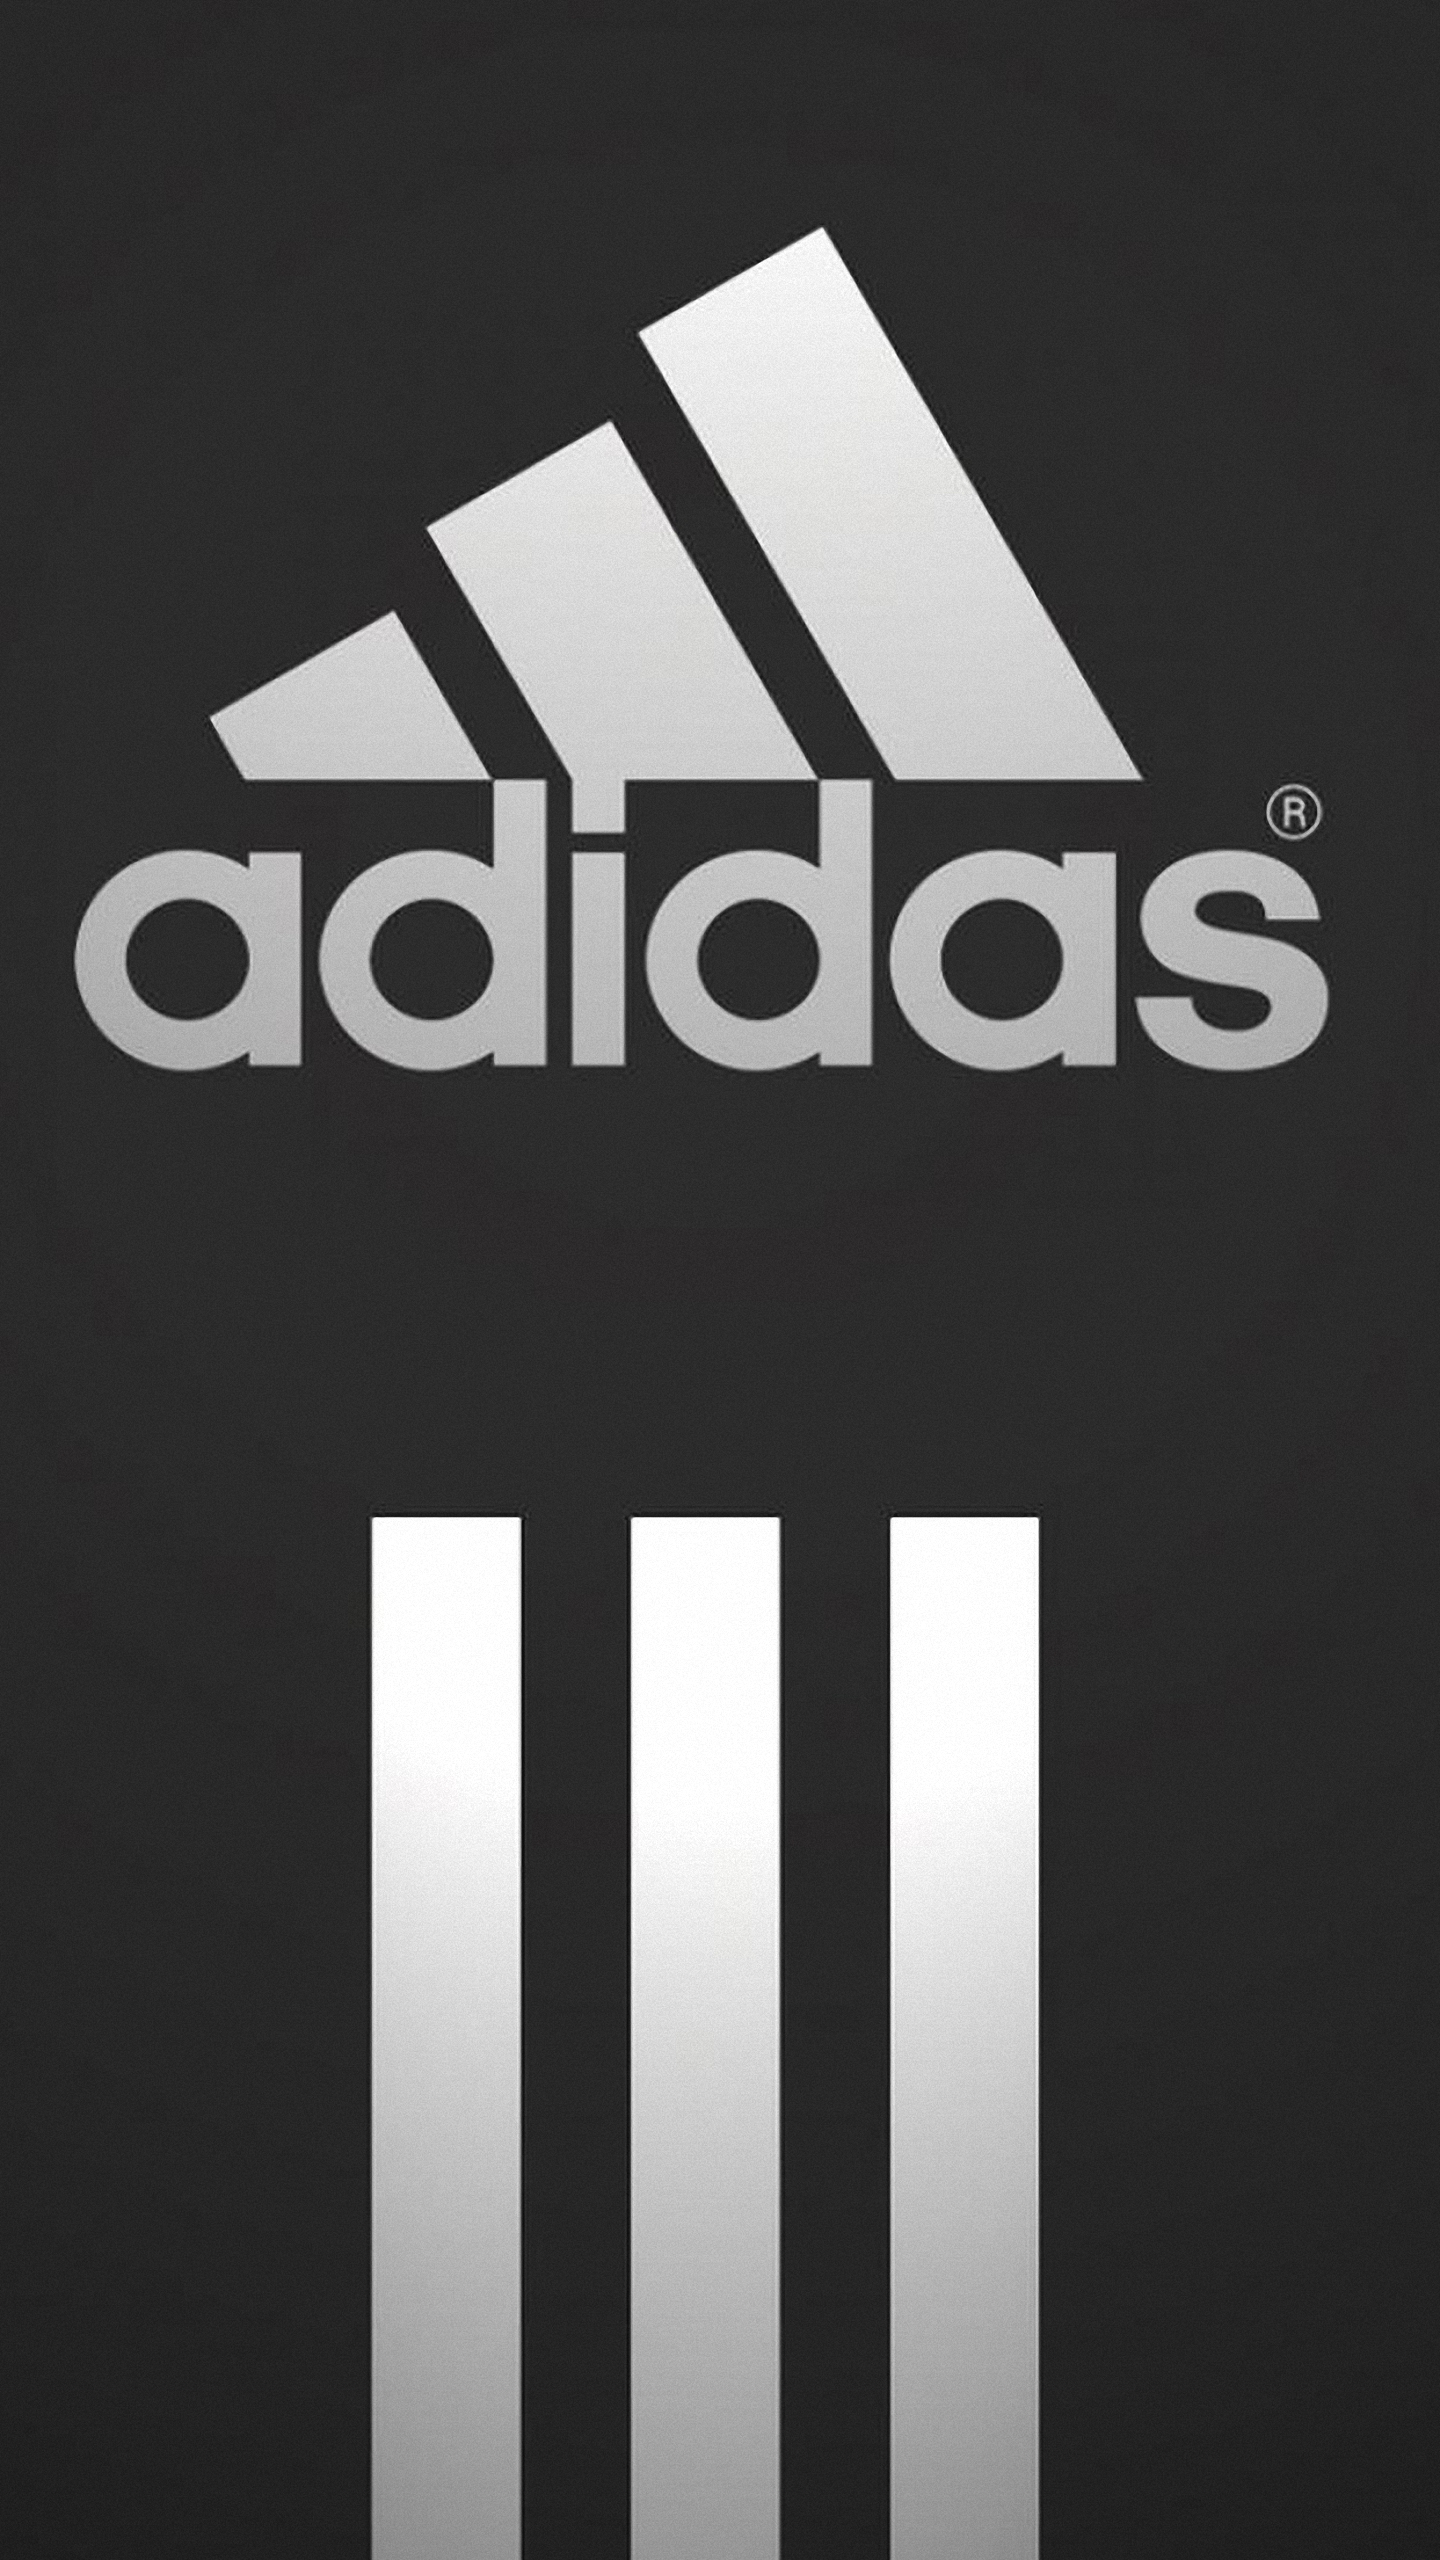 Adidas Logo iPhone 6 Wallpaper HD Wallpaper For iPhone 5